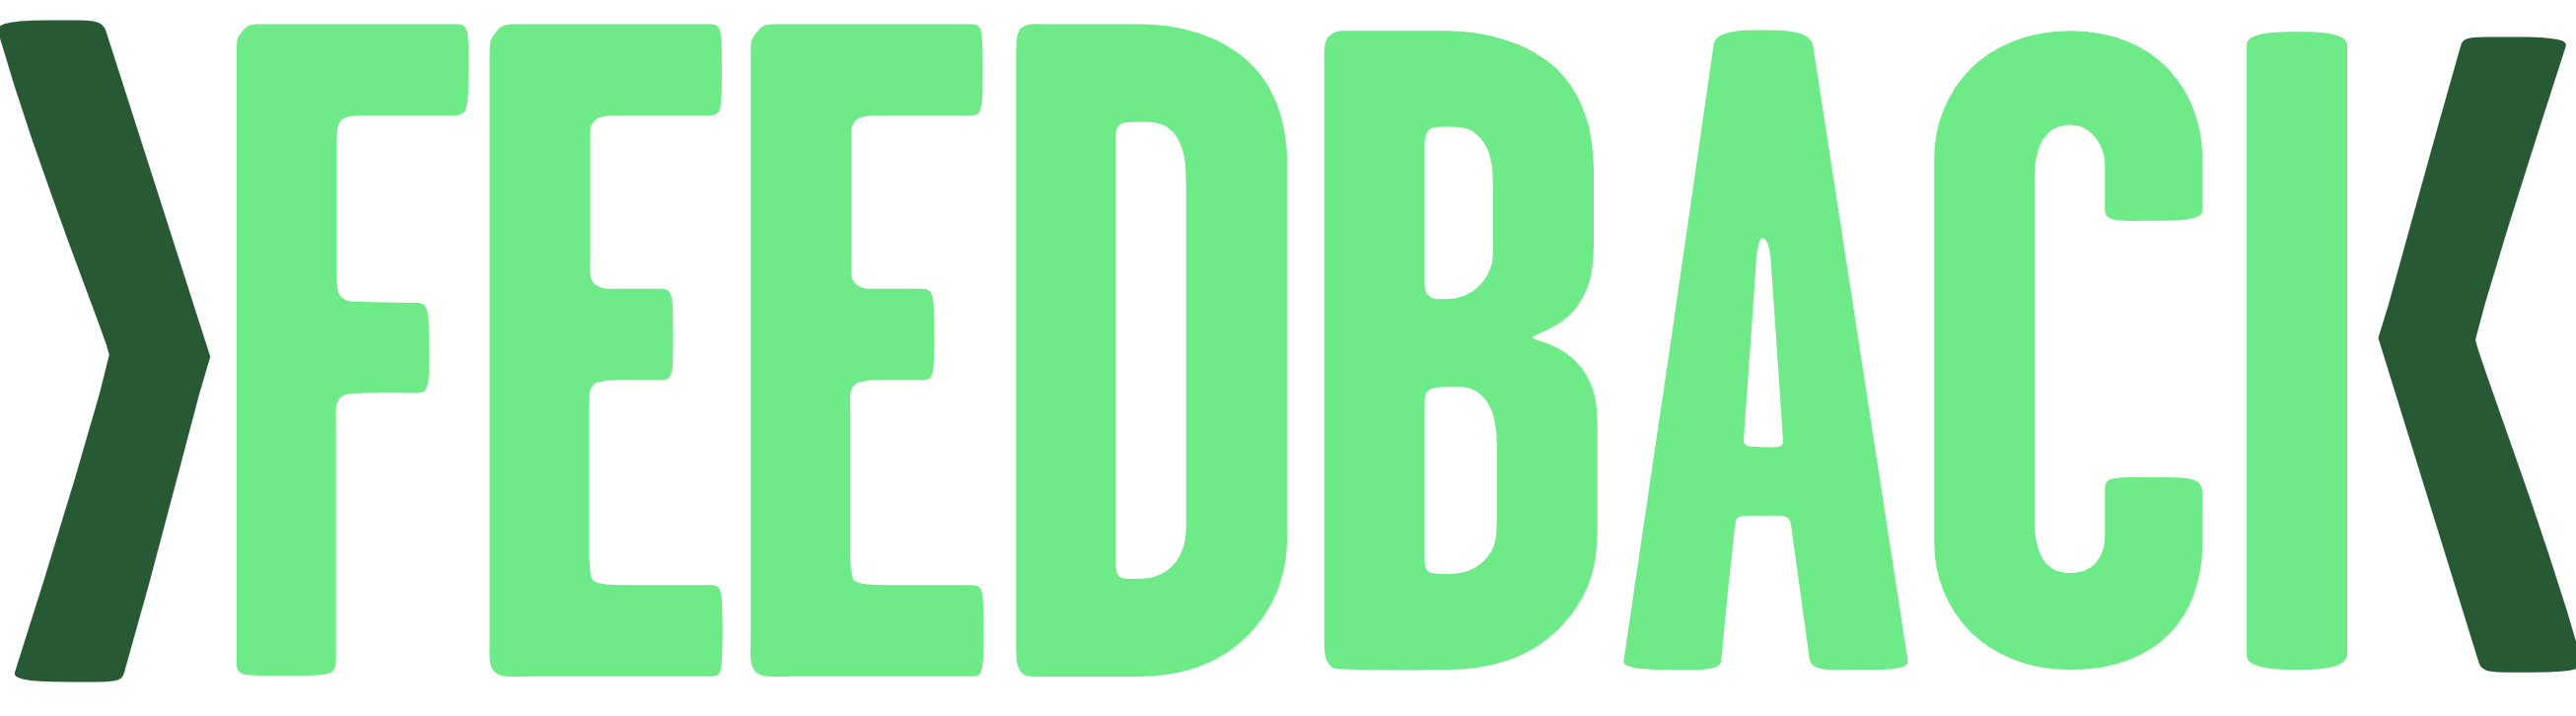 Feedback Global Logo